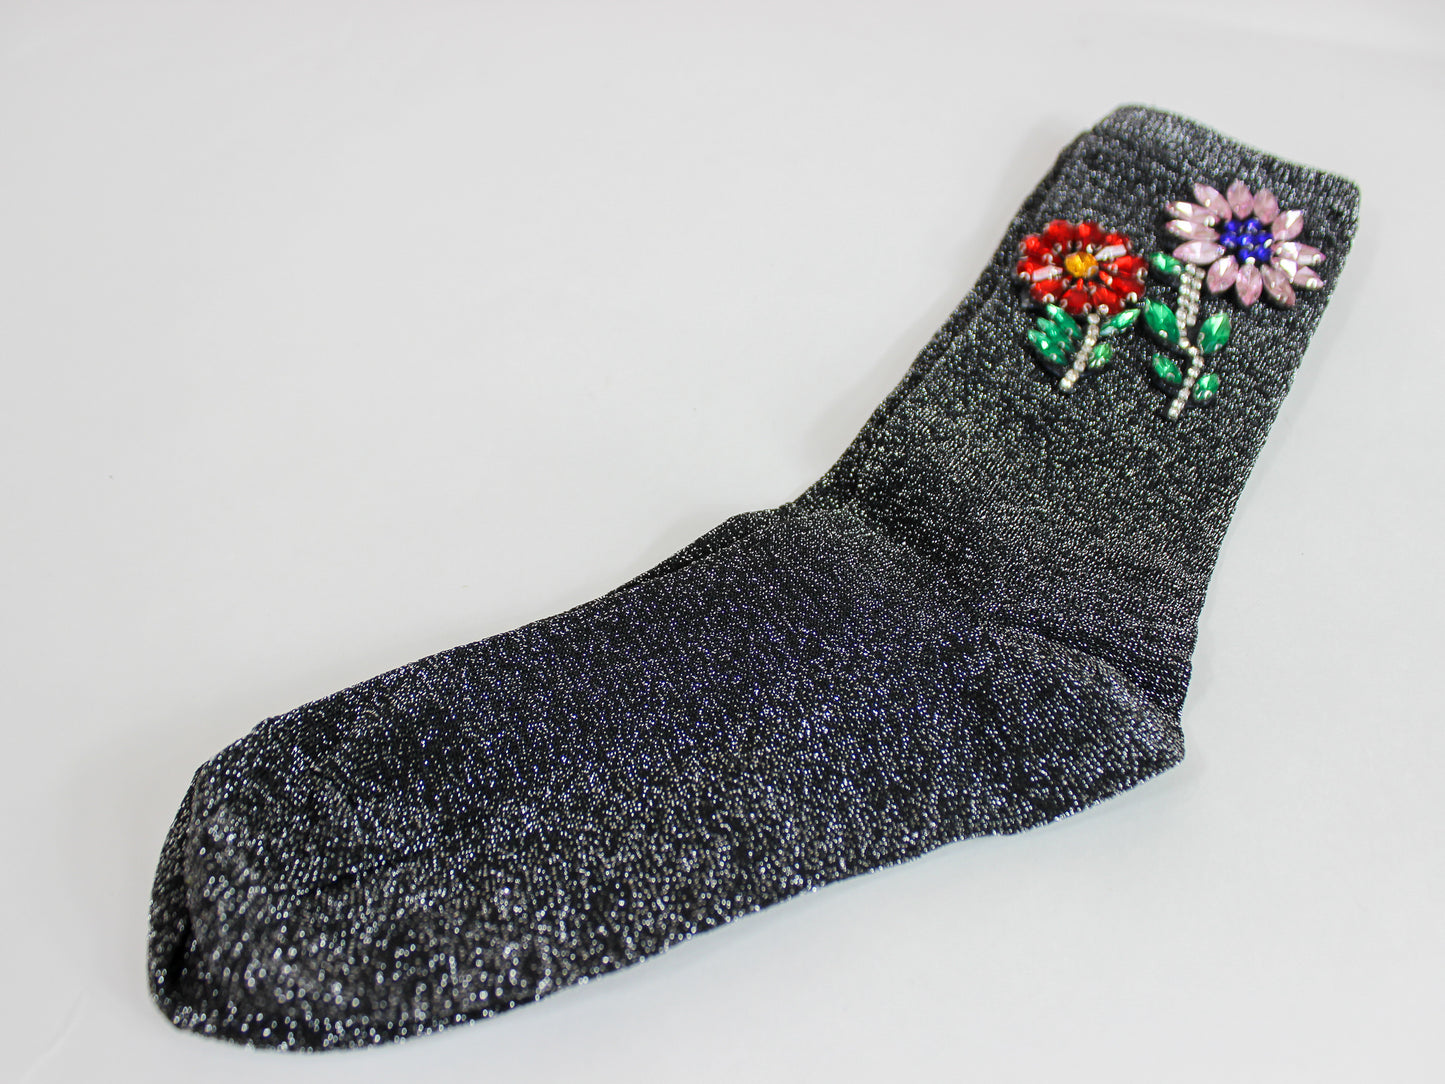 Flower Crystal Metallic Knit Socks